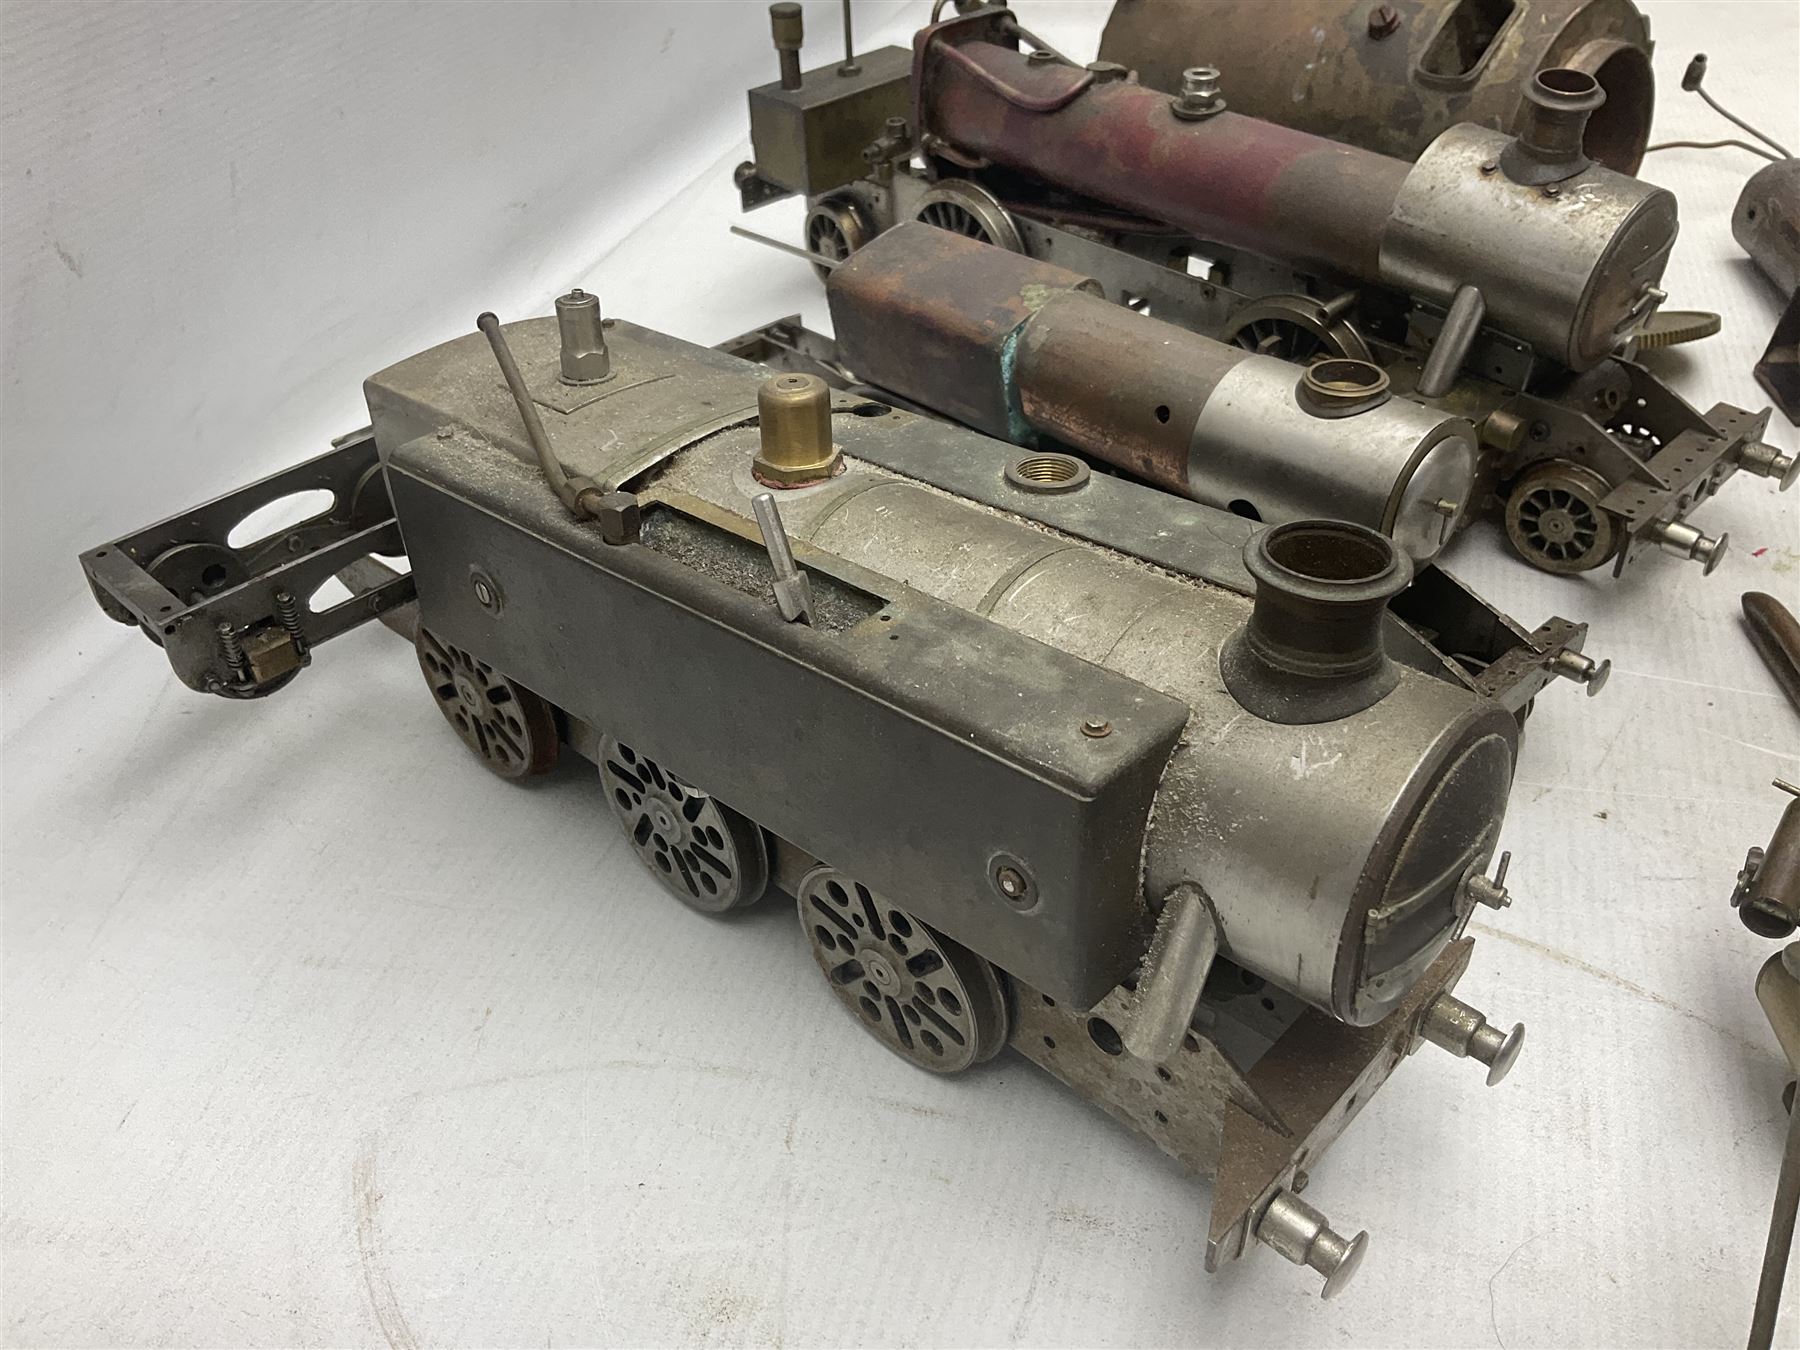 Three part-built live steam locomotives - 1.75" gauge 0-6-0 Pannier tank engine L34cm; 1.75" gauge 2 - Image 10 of 24